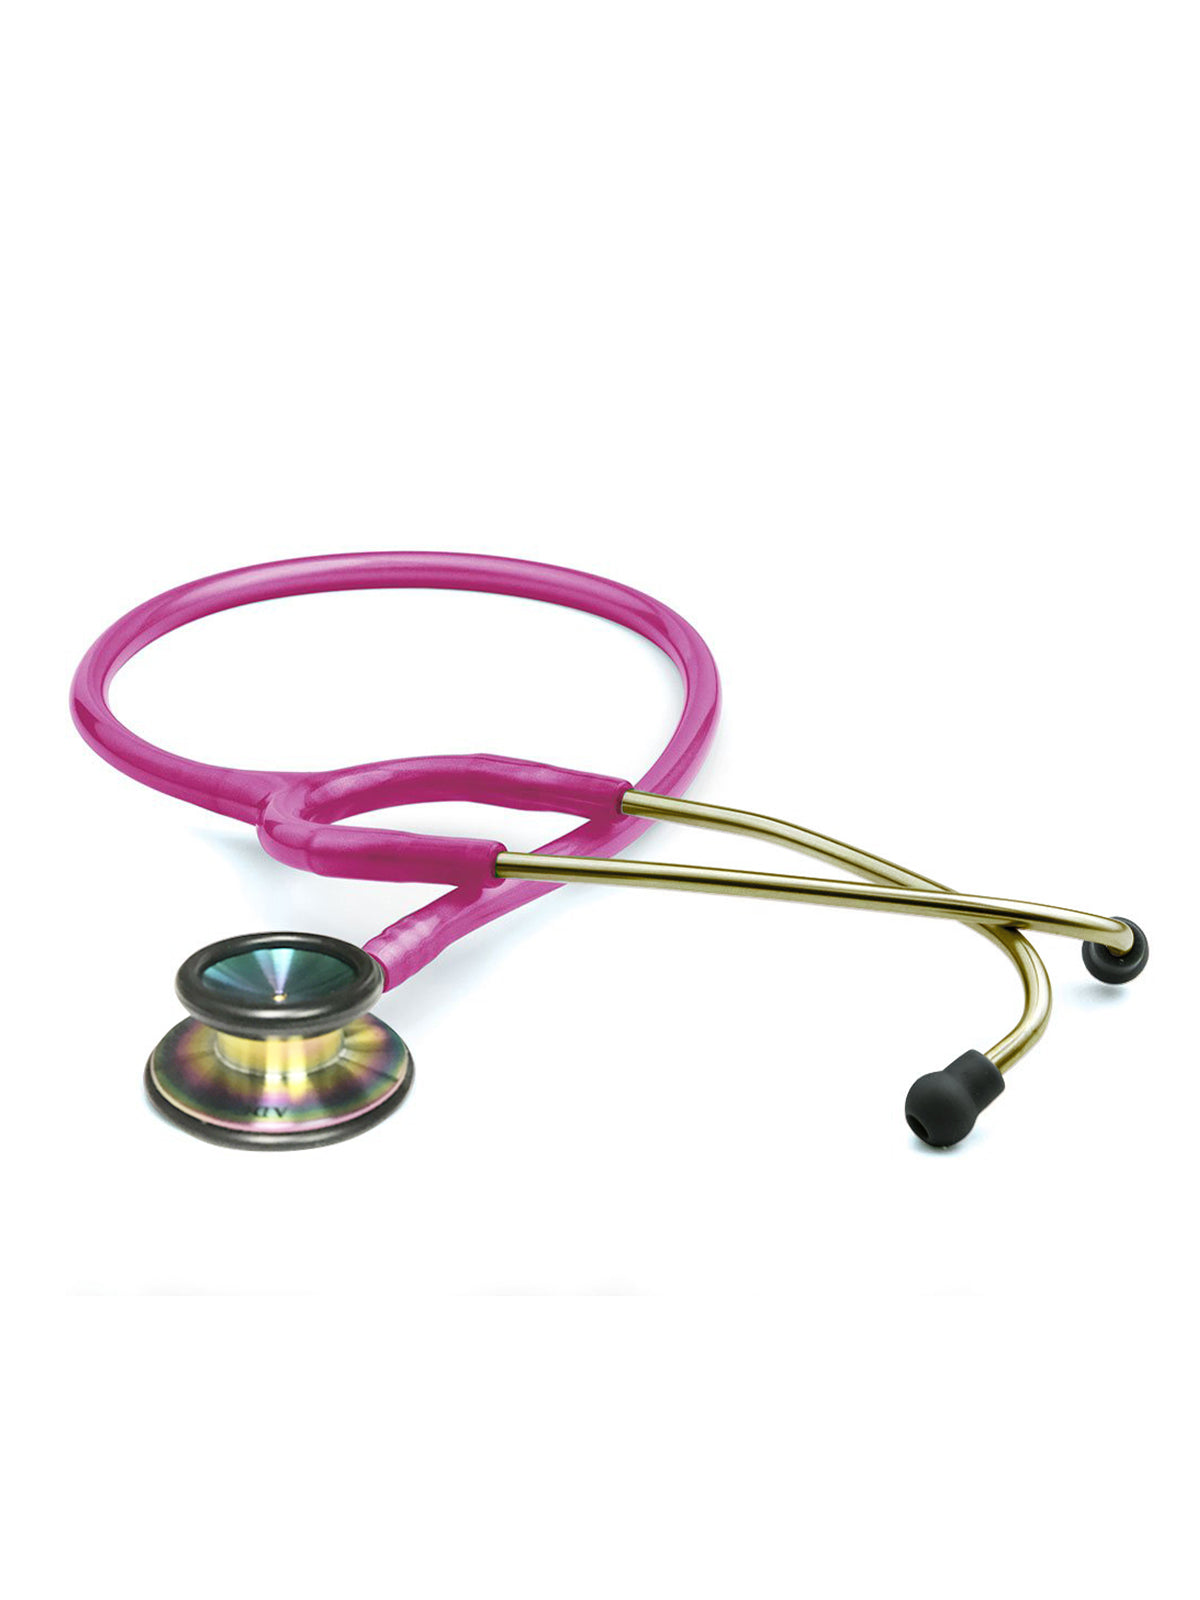 Clinician Stethoscope - AD603 - Iridescent Metallic Raspberry